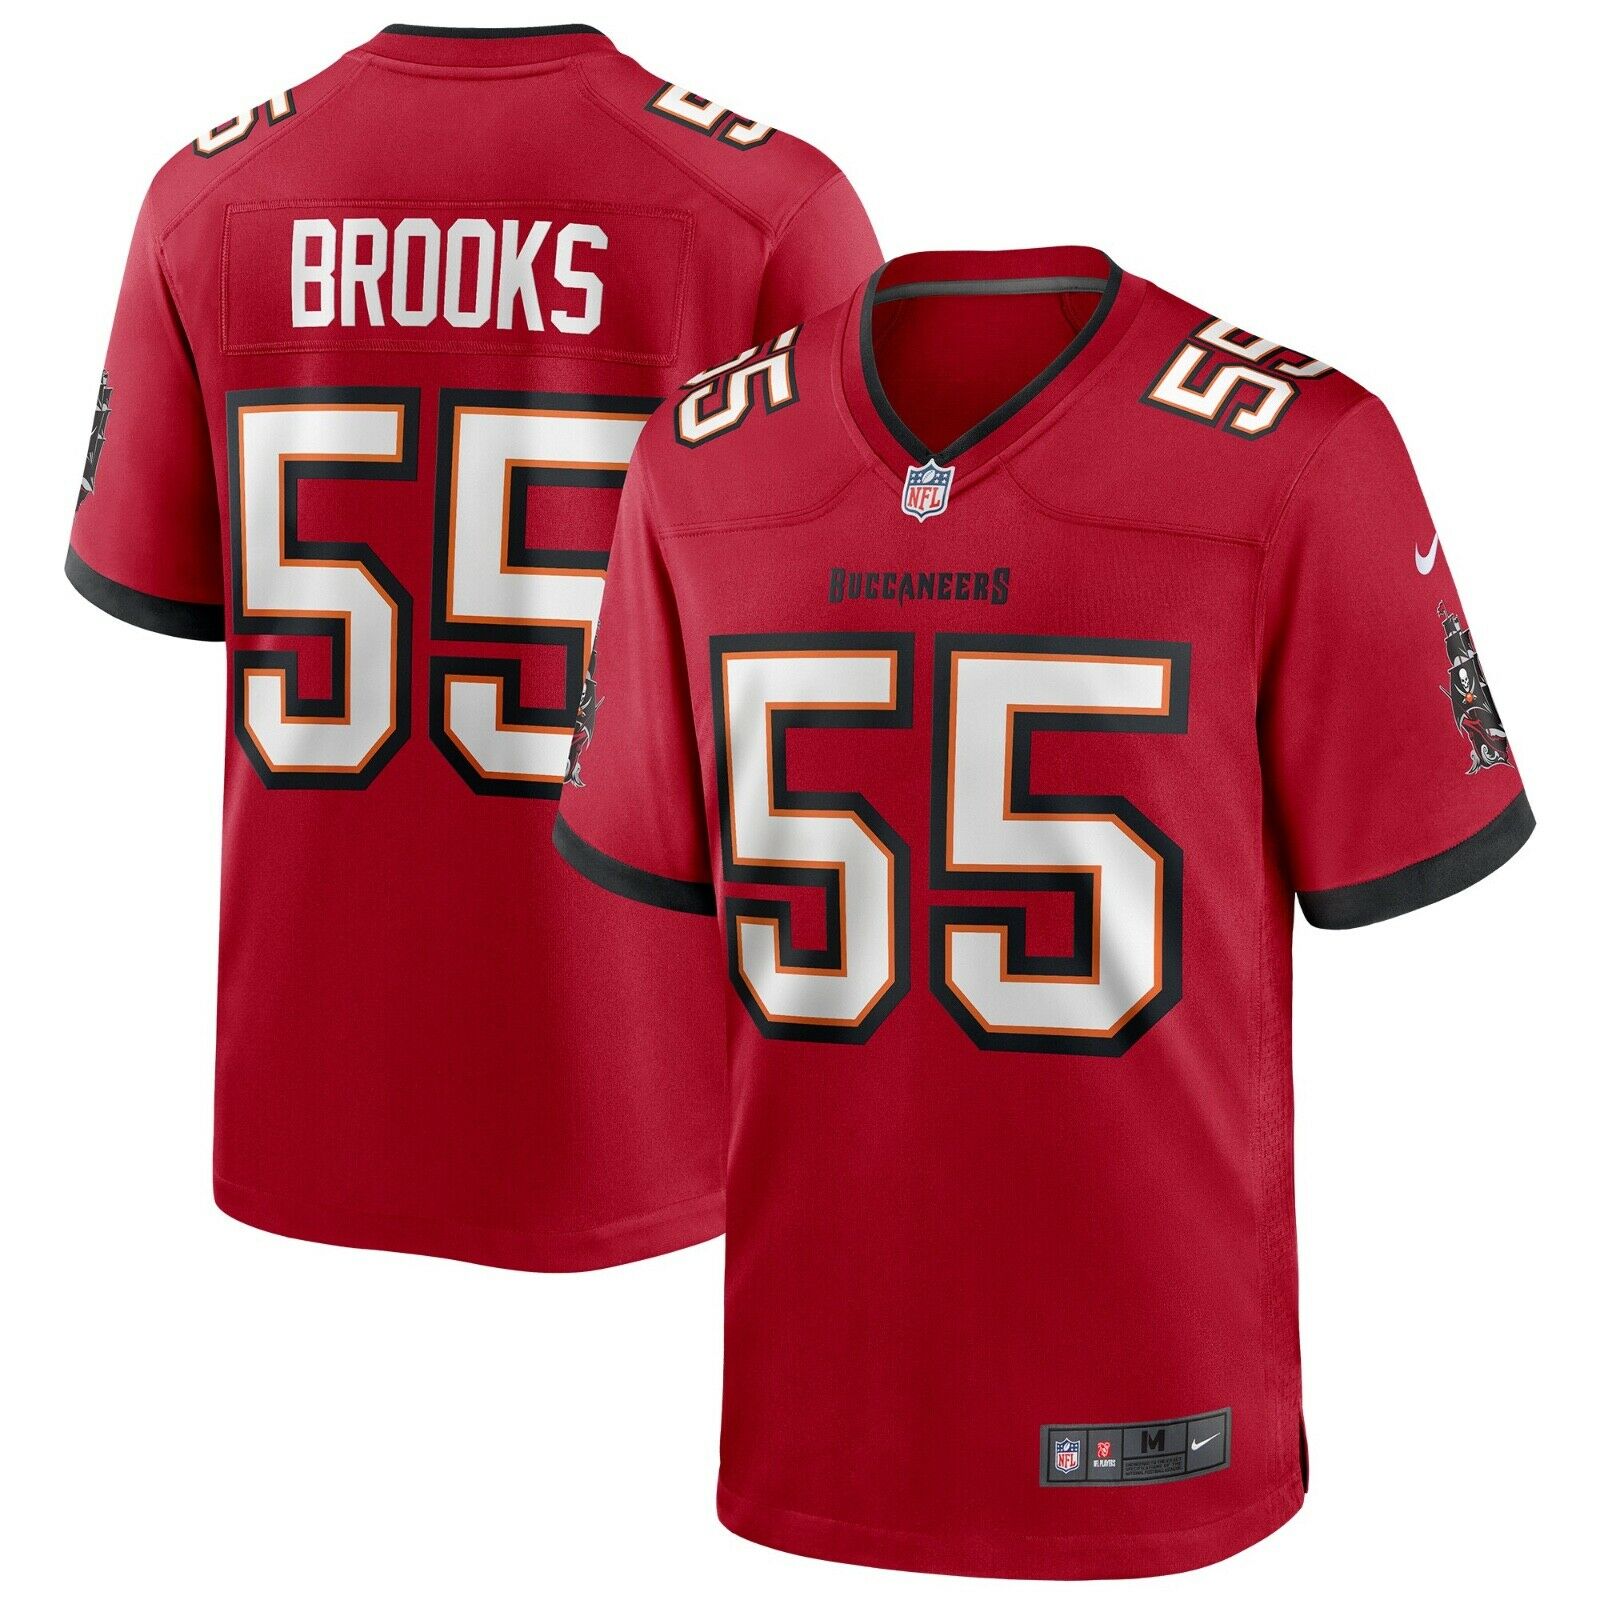 Men's Tampa Bay Buccaneers #55 Derrick Brooks Nike NFL Game Retired Player Jersey